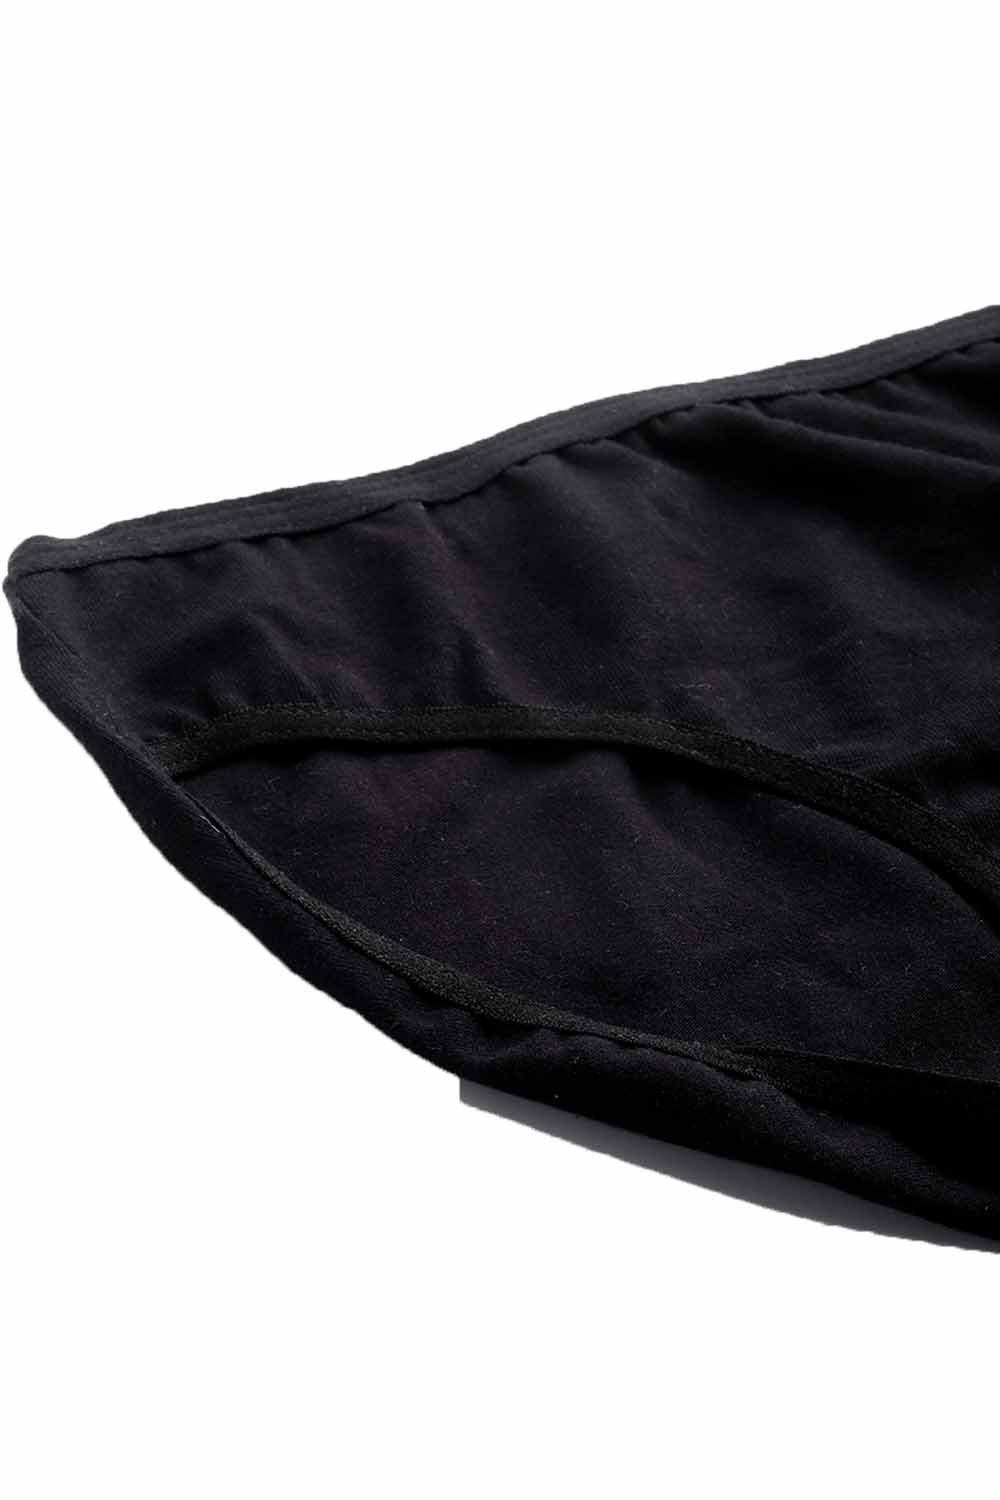 ISBP057-Boyshorts-Black-Buy Online Inner Sense Organic Cotton Seamless Side Support  Bra & Panty Set